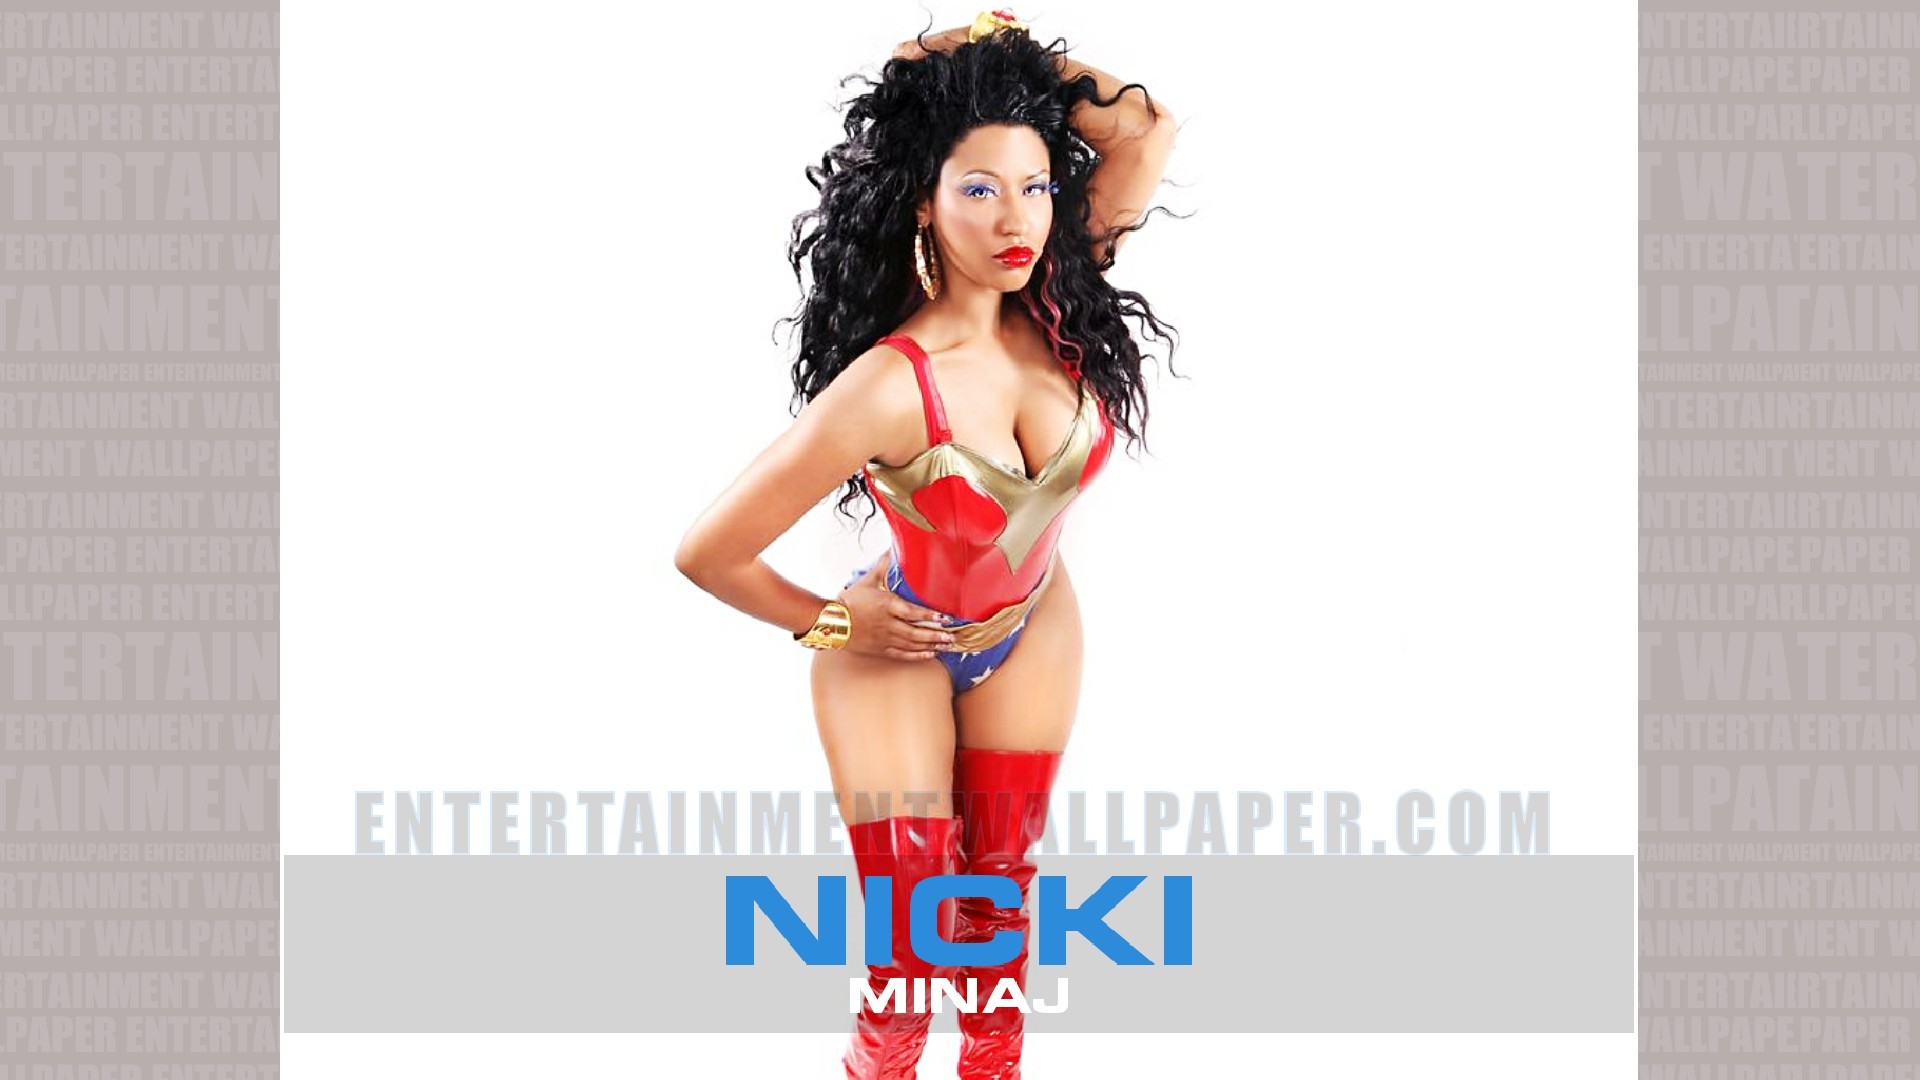 1920x1080 Nicki Minaj Wallpaper - Original size, download now.